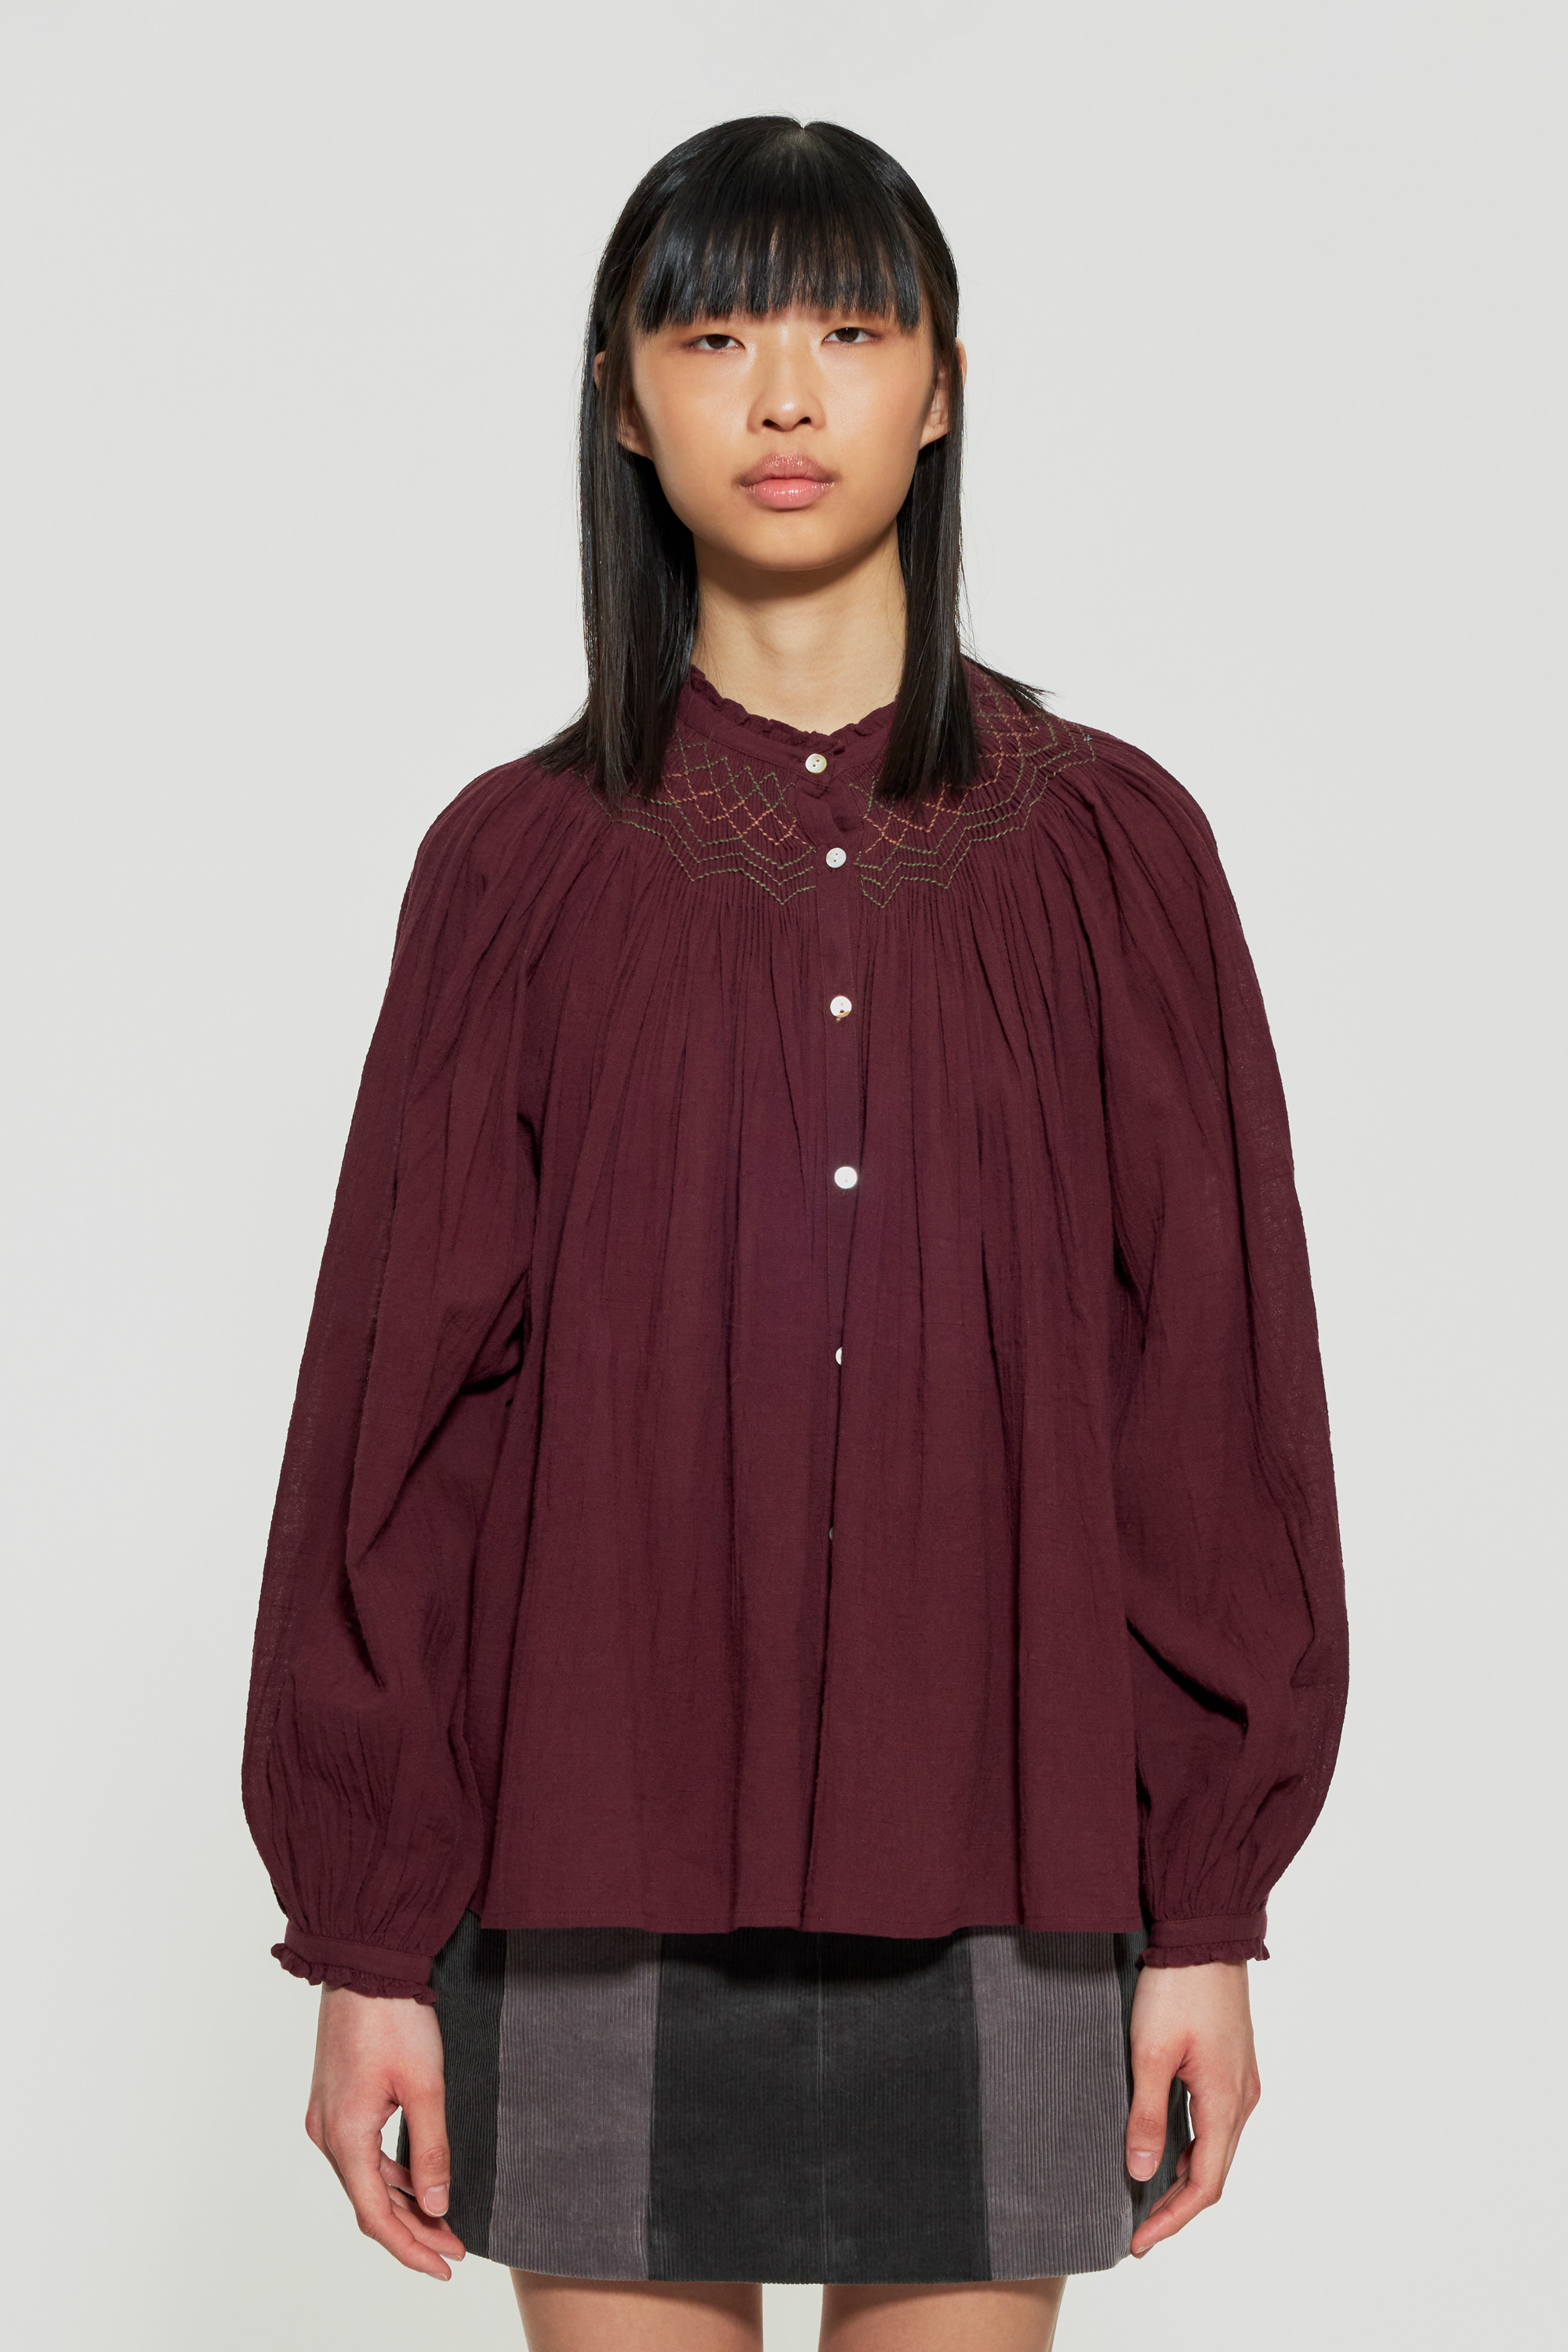 Bordeaux blouse with long puffed sleeves | ANTIK BATIK